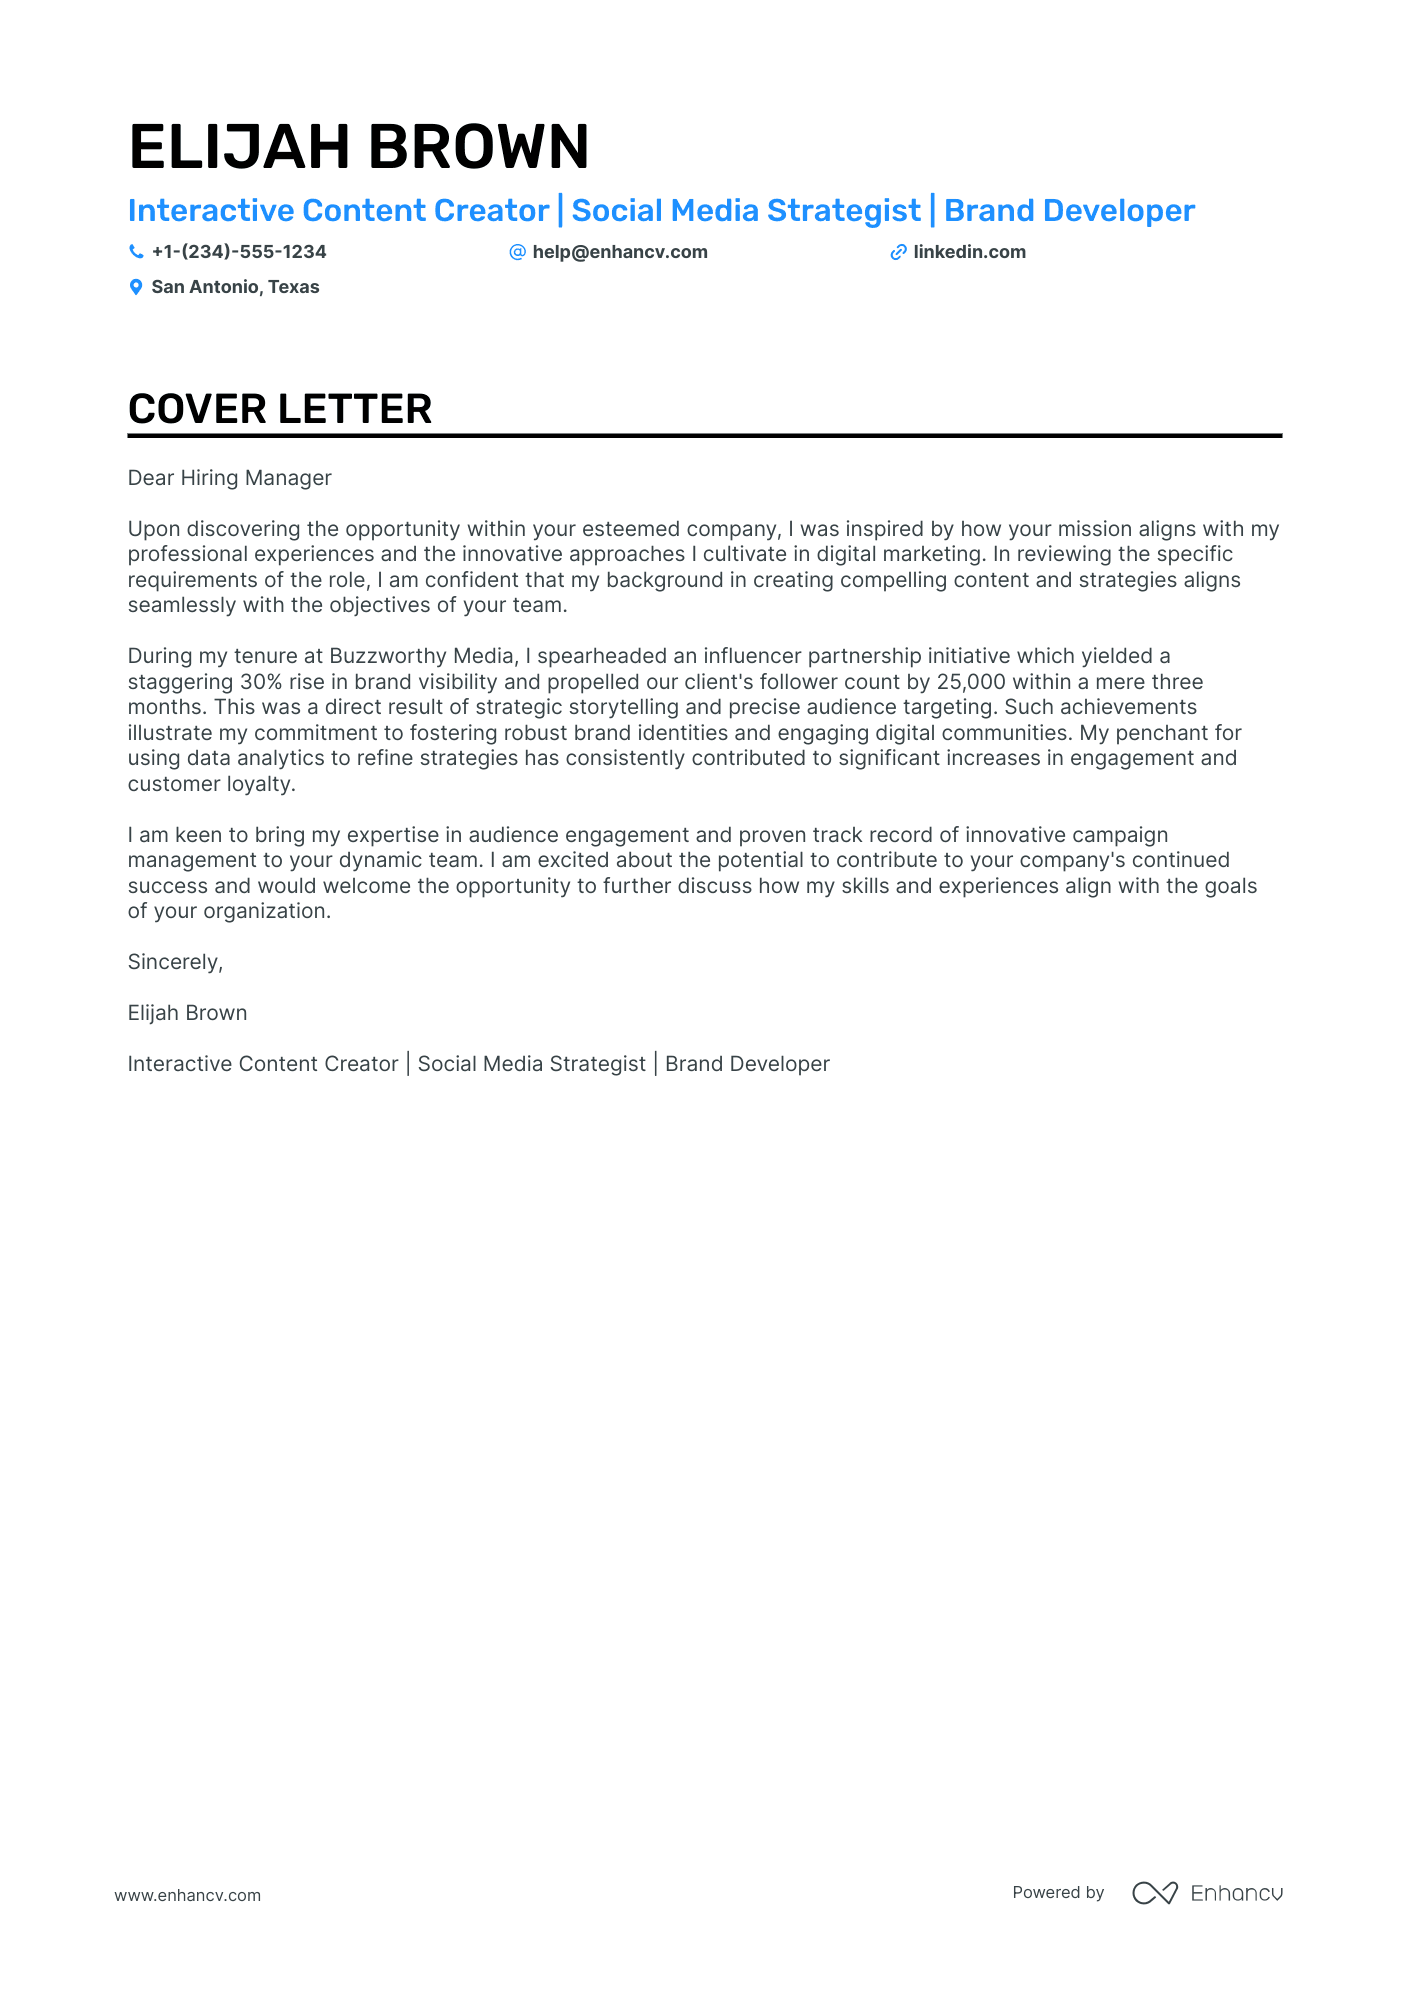 Interactive Designer cover letter